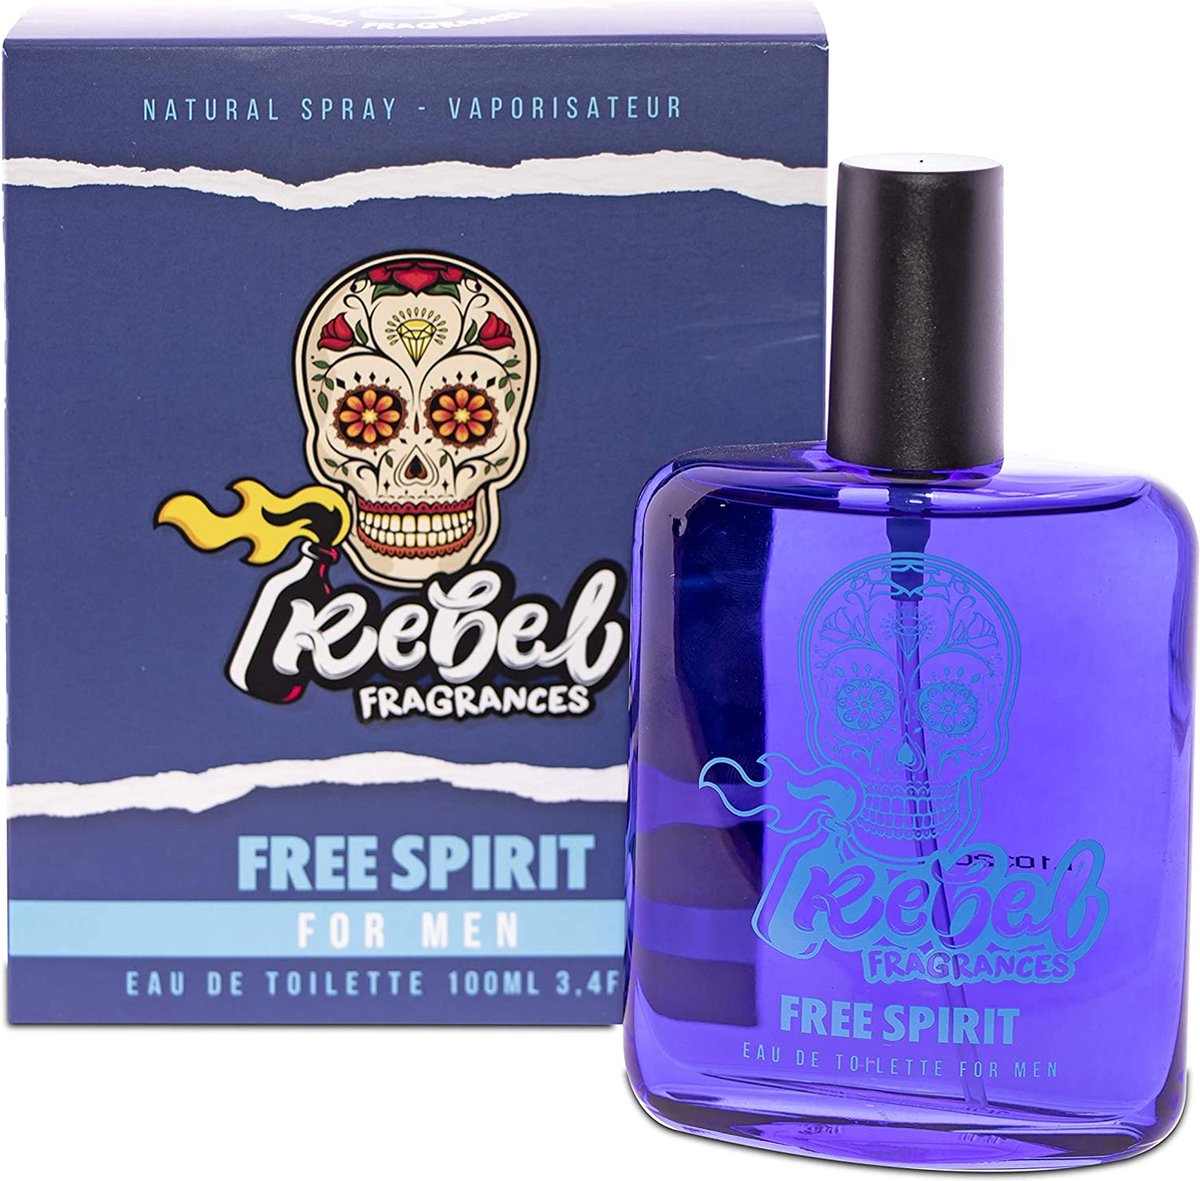 Rebel Fragrances Free Spirit Eau de Toilette Mannen - 100 ml - Mannen Parfum - Mannen Cadeautjes - Verleidelijk en Intrigerend Herengeur